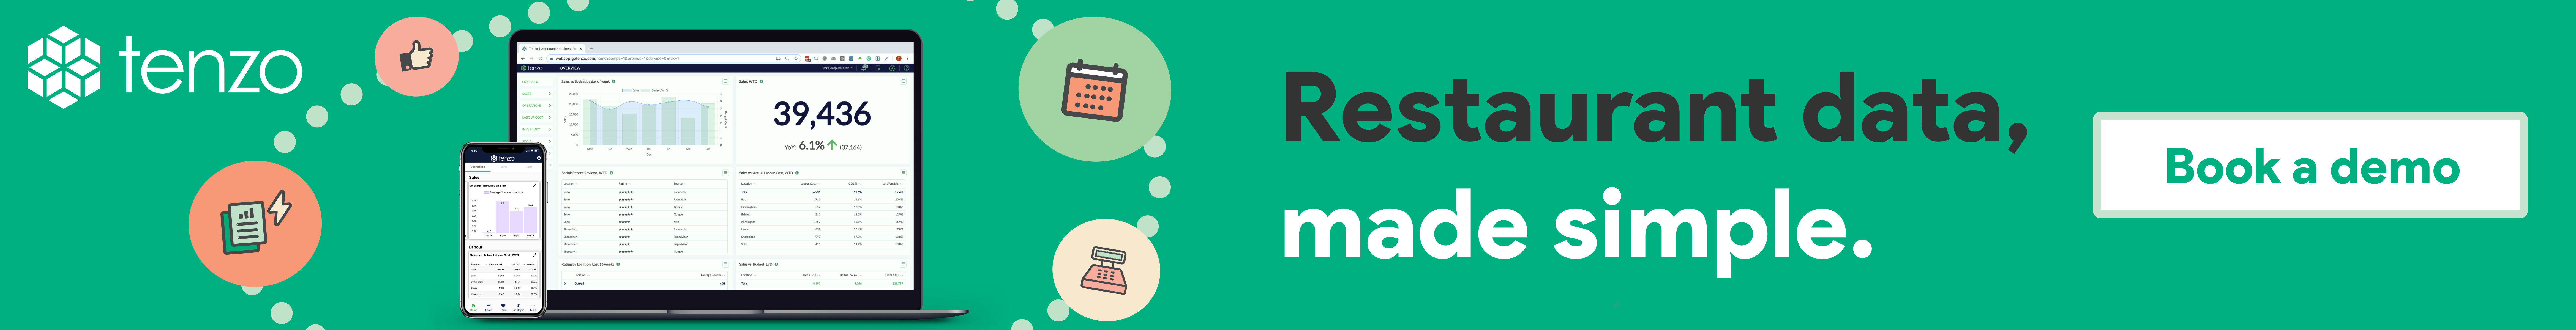 restaurant data made simple